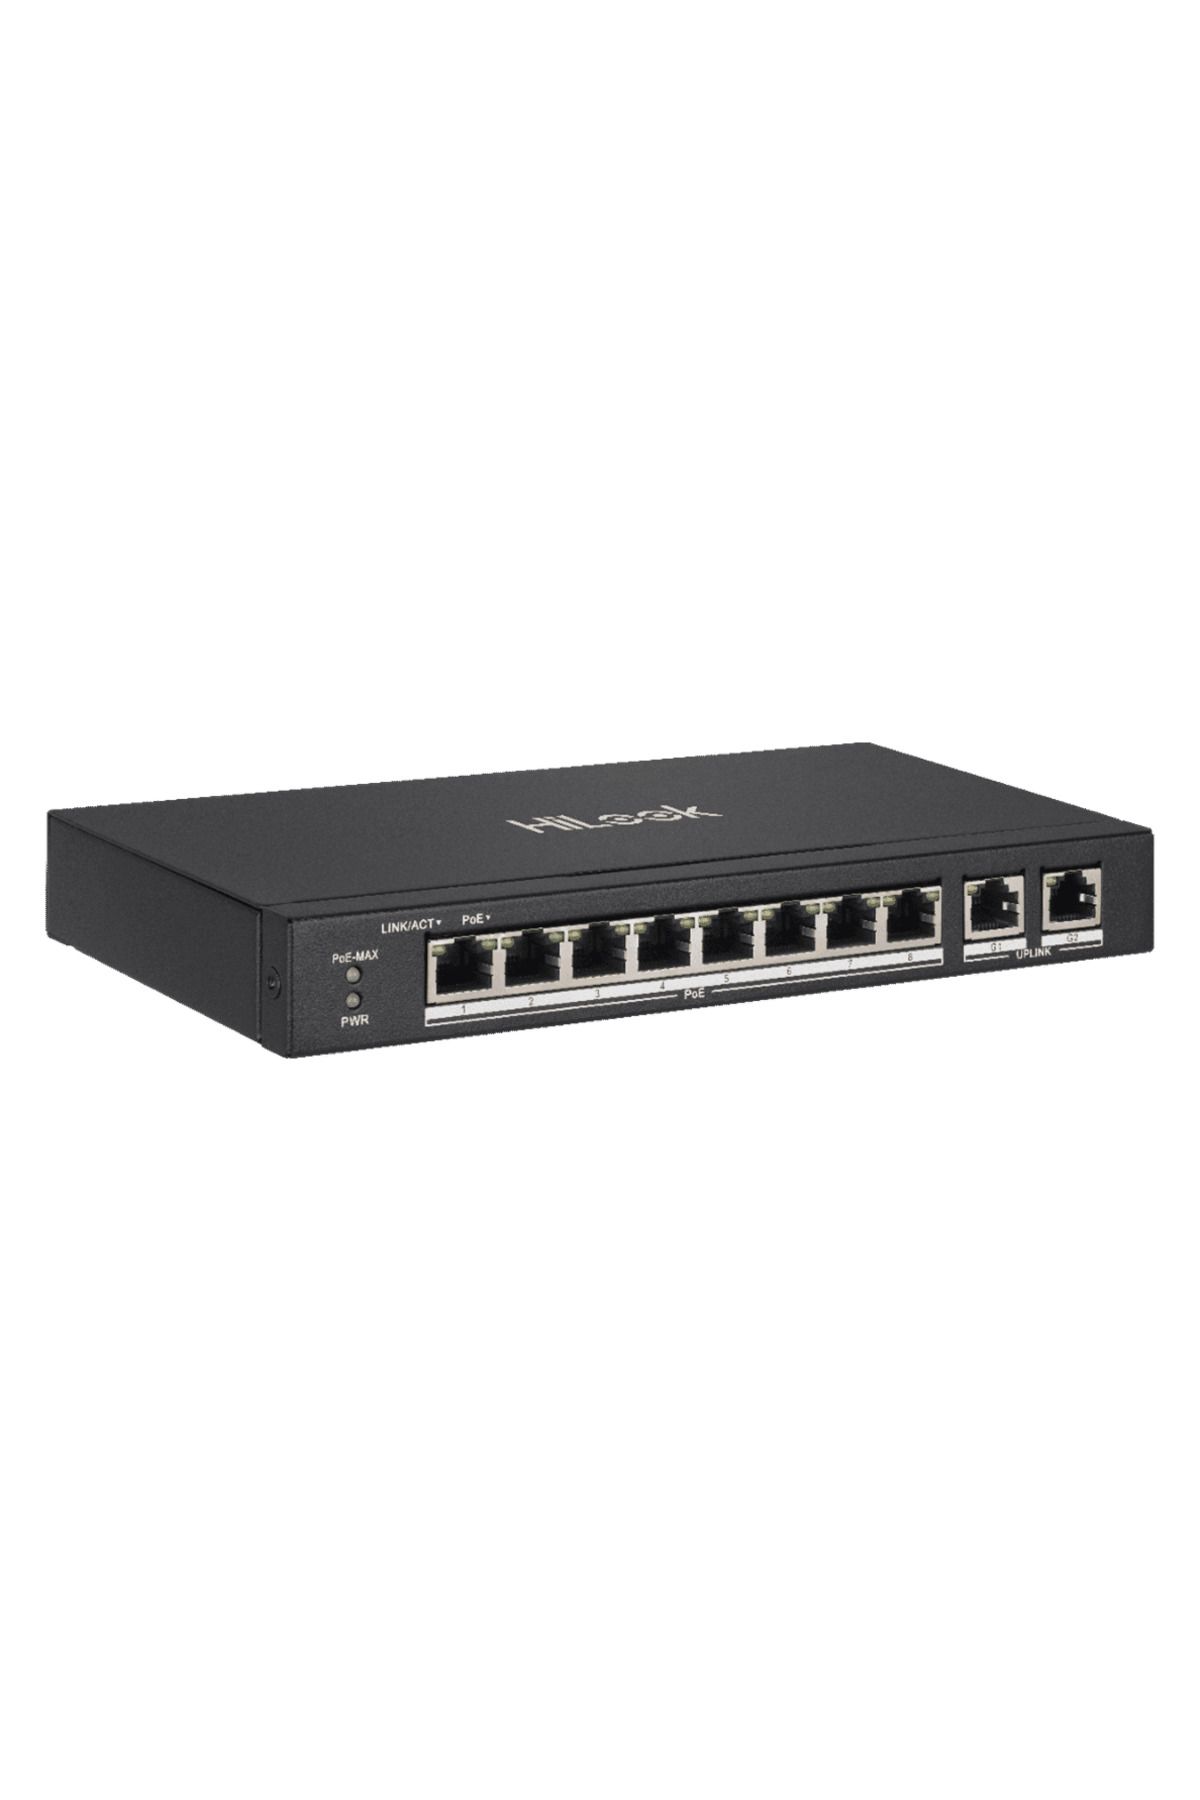 Hilook Ns-0310P-60(B) 10 Port 2 Port 10-100-1000 Gigabit 8 Port 10-100 Poe 60W Switch Hub